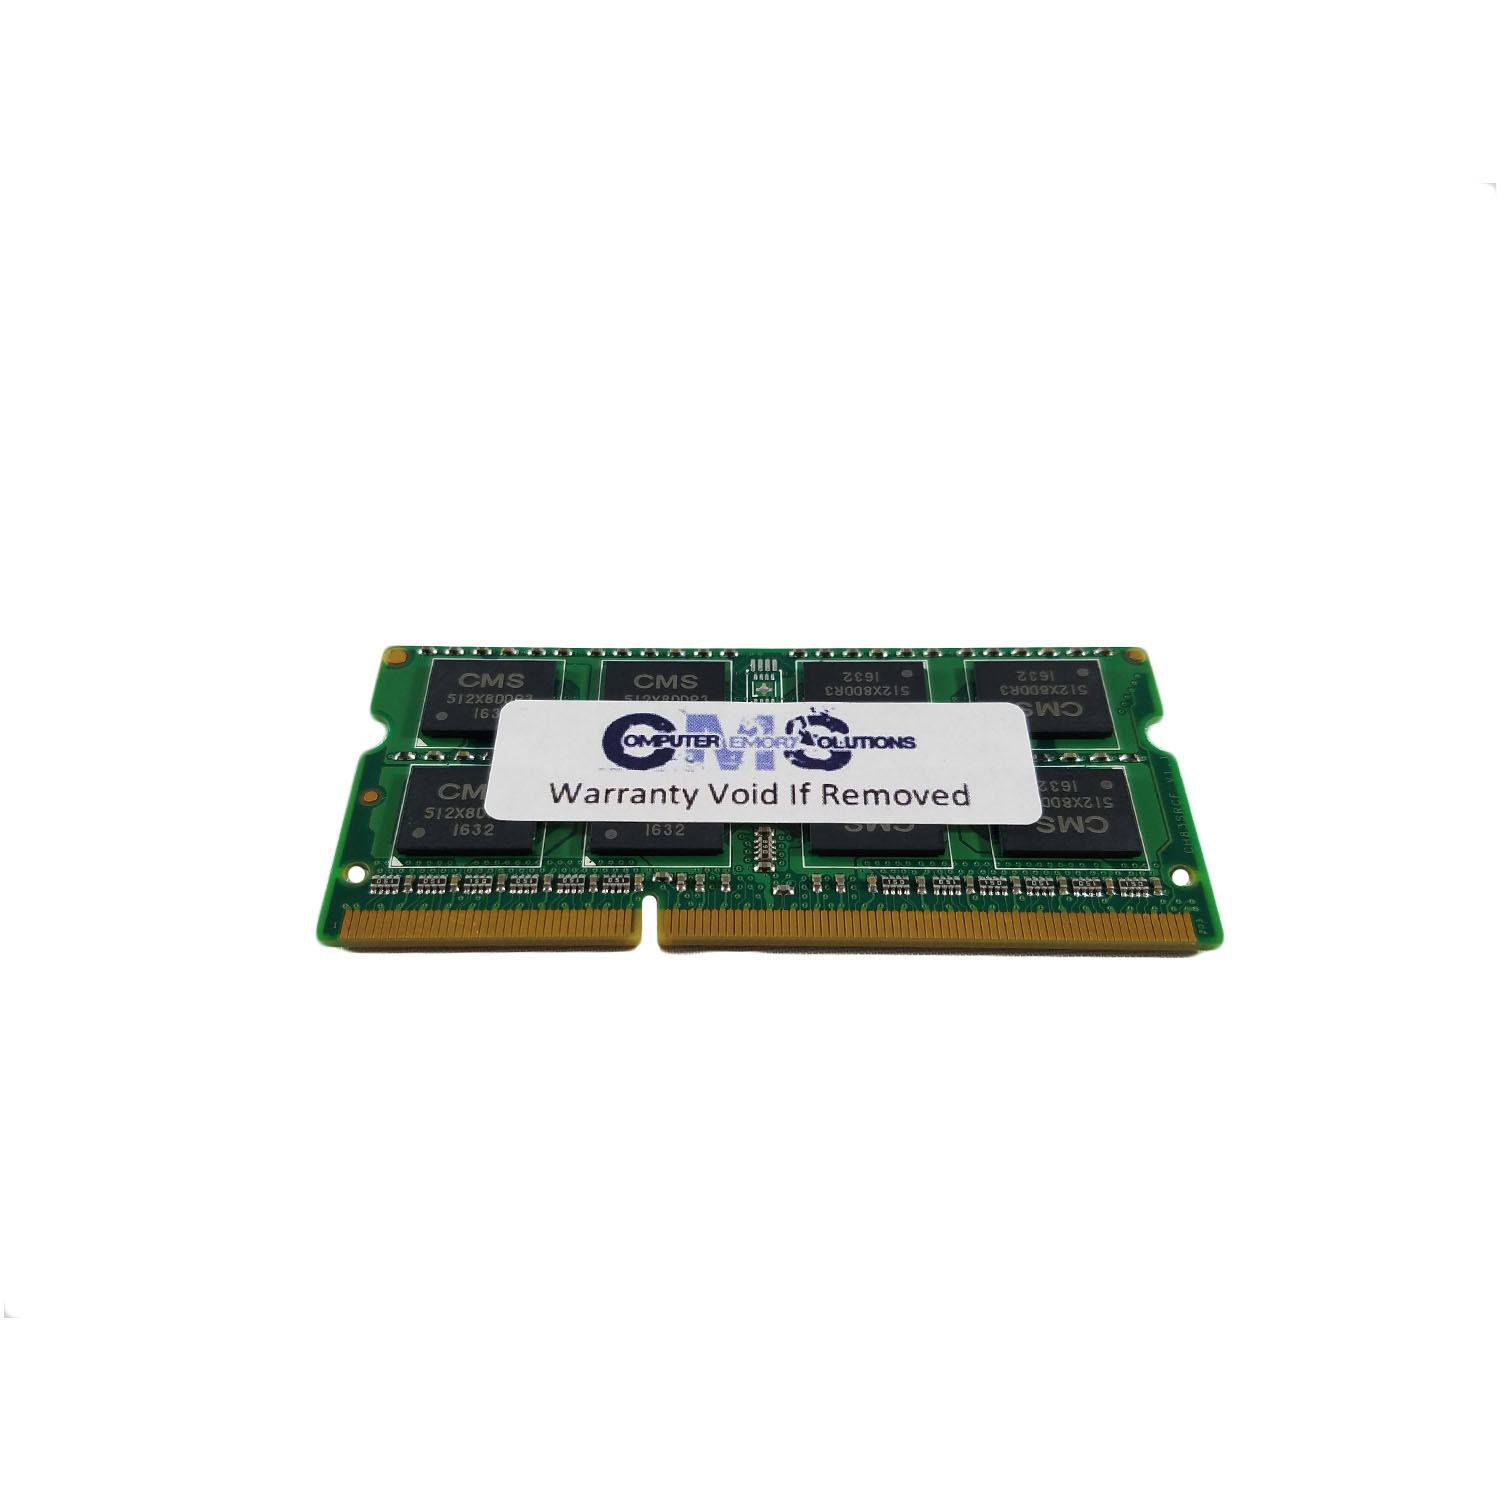 CMS 8GB (1x8GB) DDR3 12800 1600MHz NON ECC SODIMM Memory Ram Upgrade Compatible with Lenovo® Lenovo® Yoga 700-14ISK - A8 - image 2 of 3